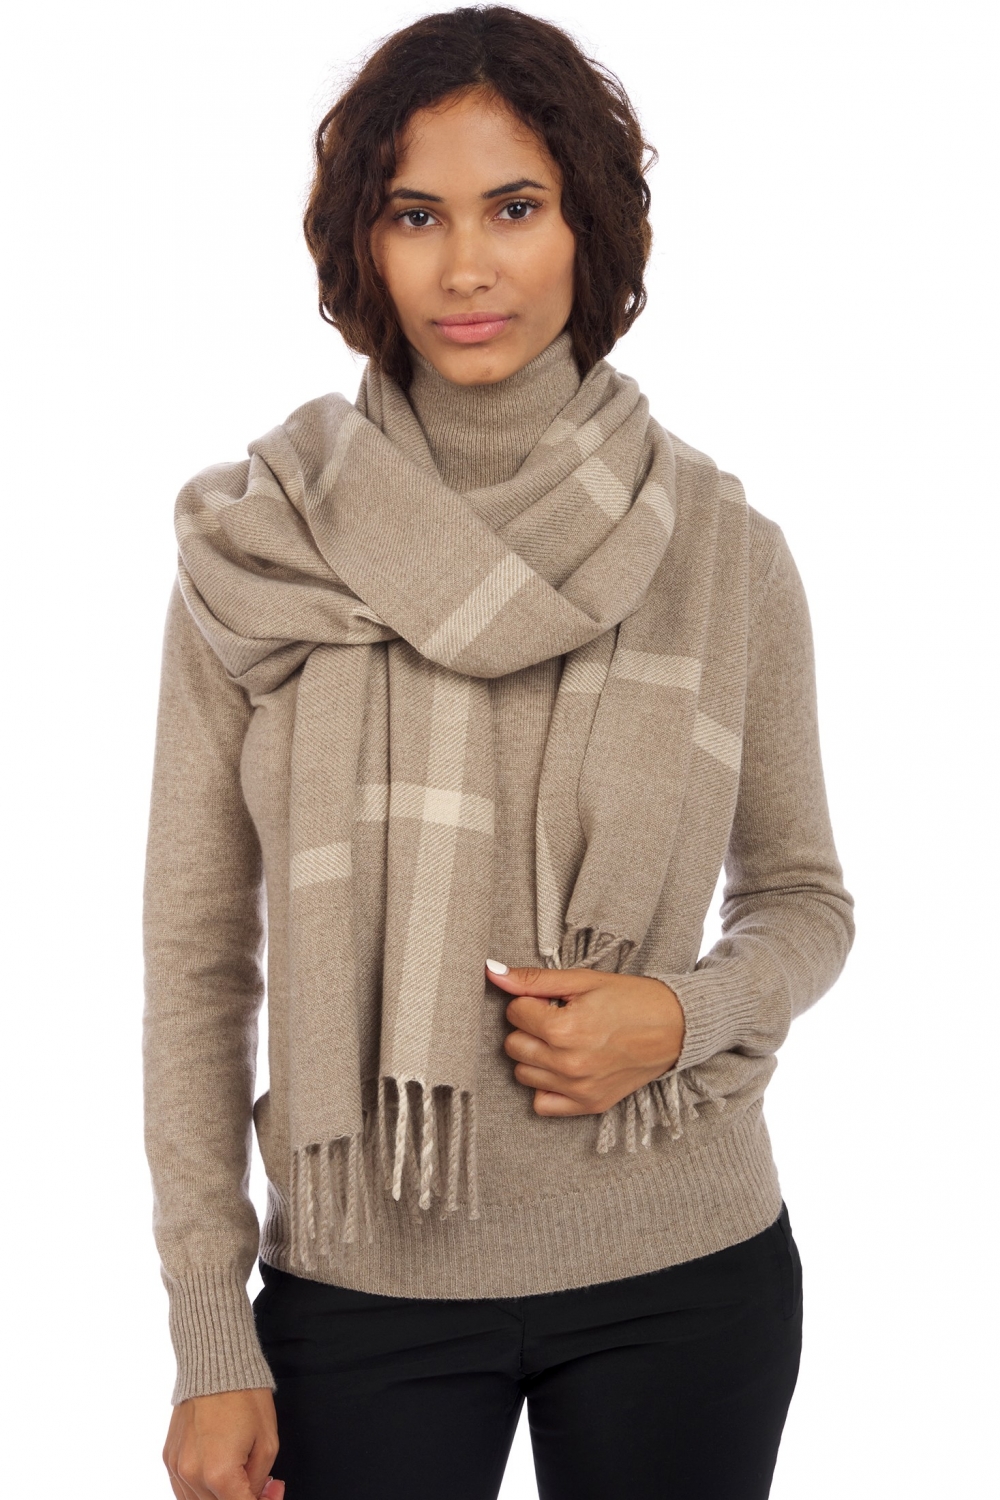 Cashmere ladies scarves mufflers amsterdam natural beige natural brown 50 x 210 cm